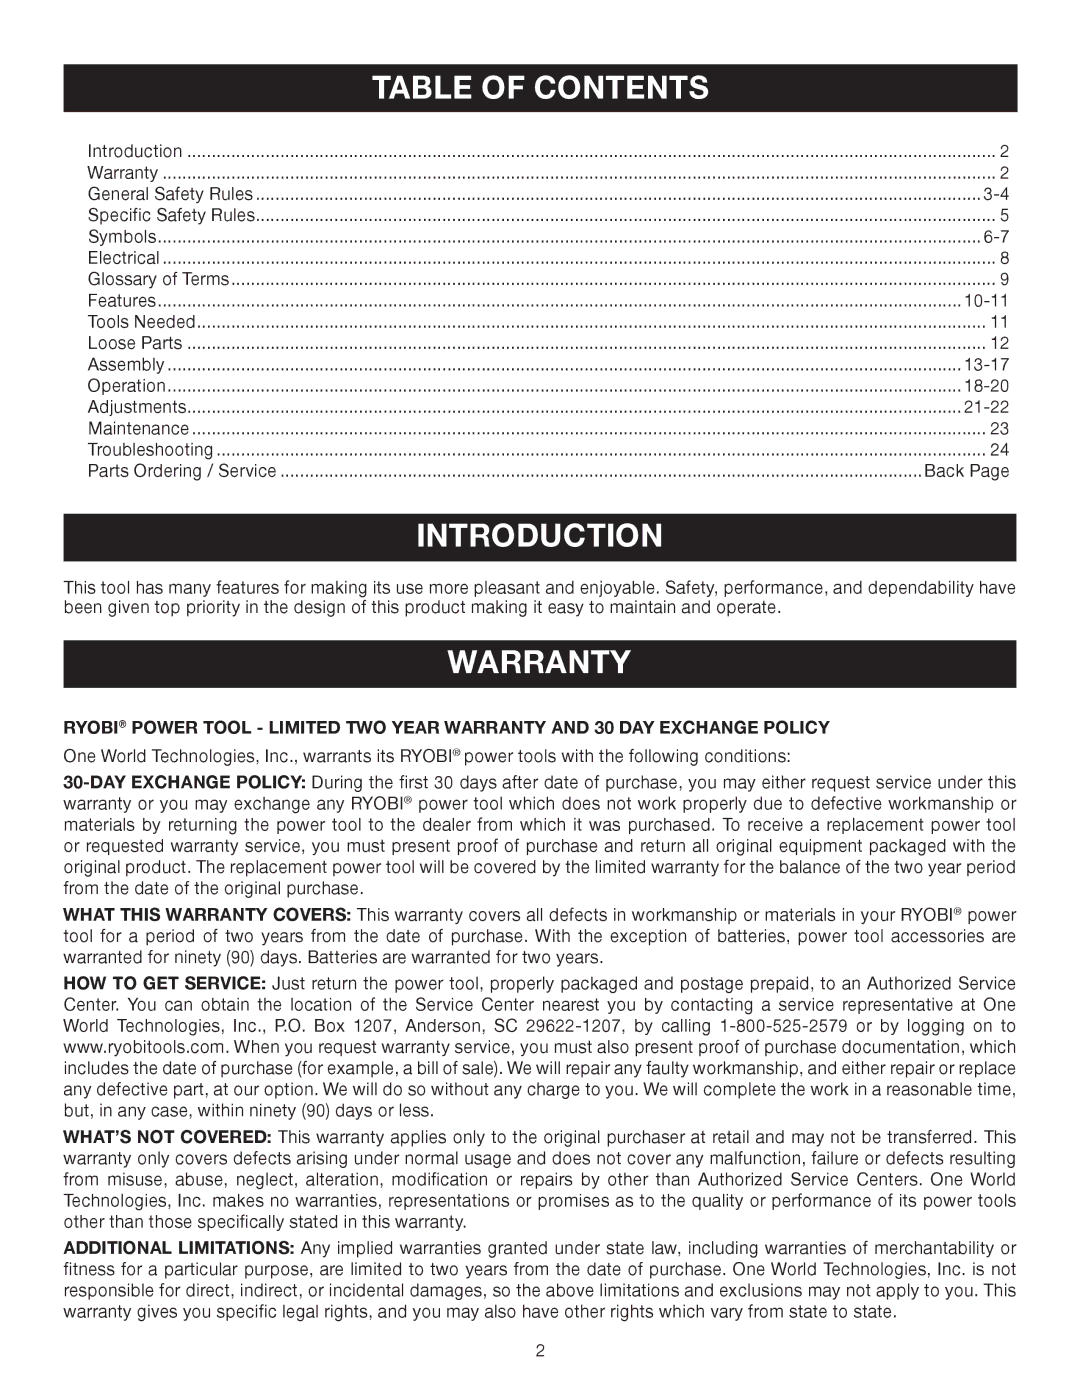 Ryobi DP102L manual Introduction, Warranty 